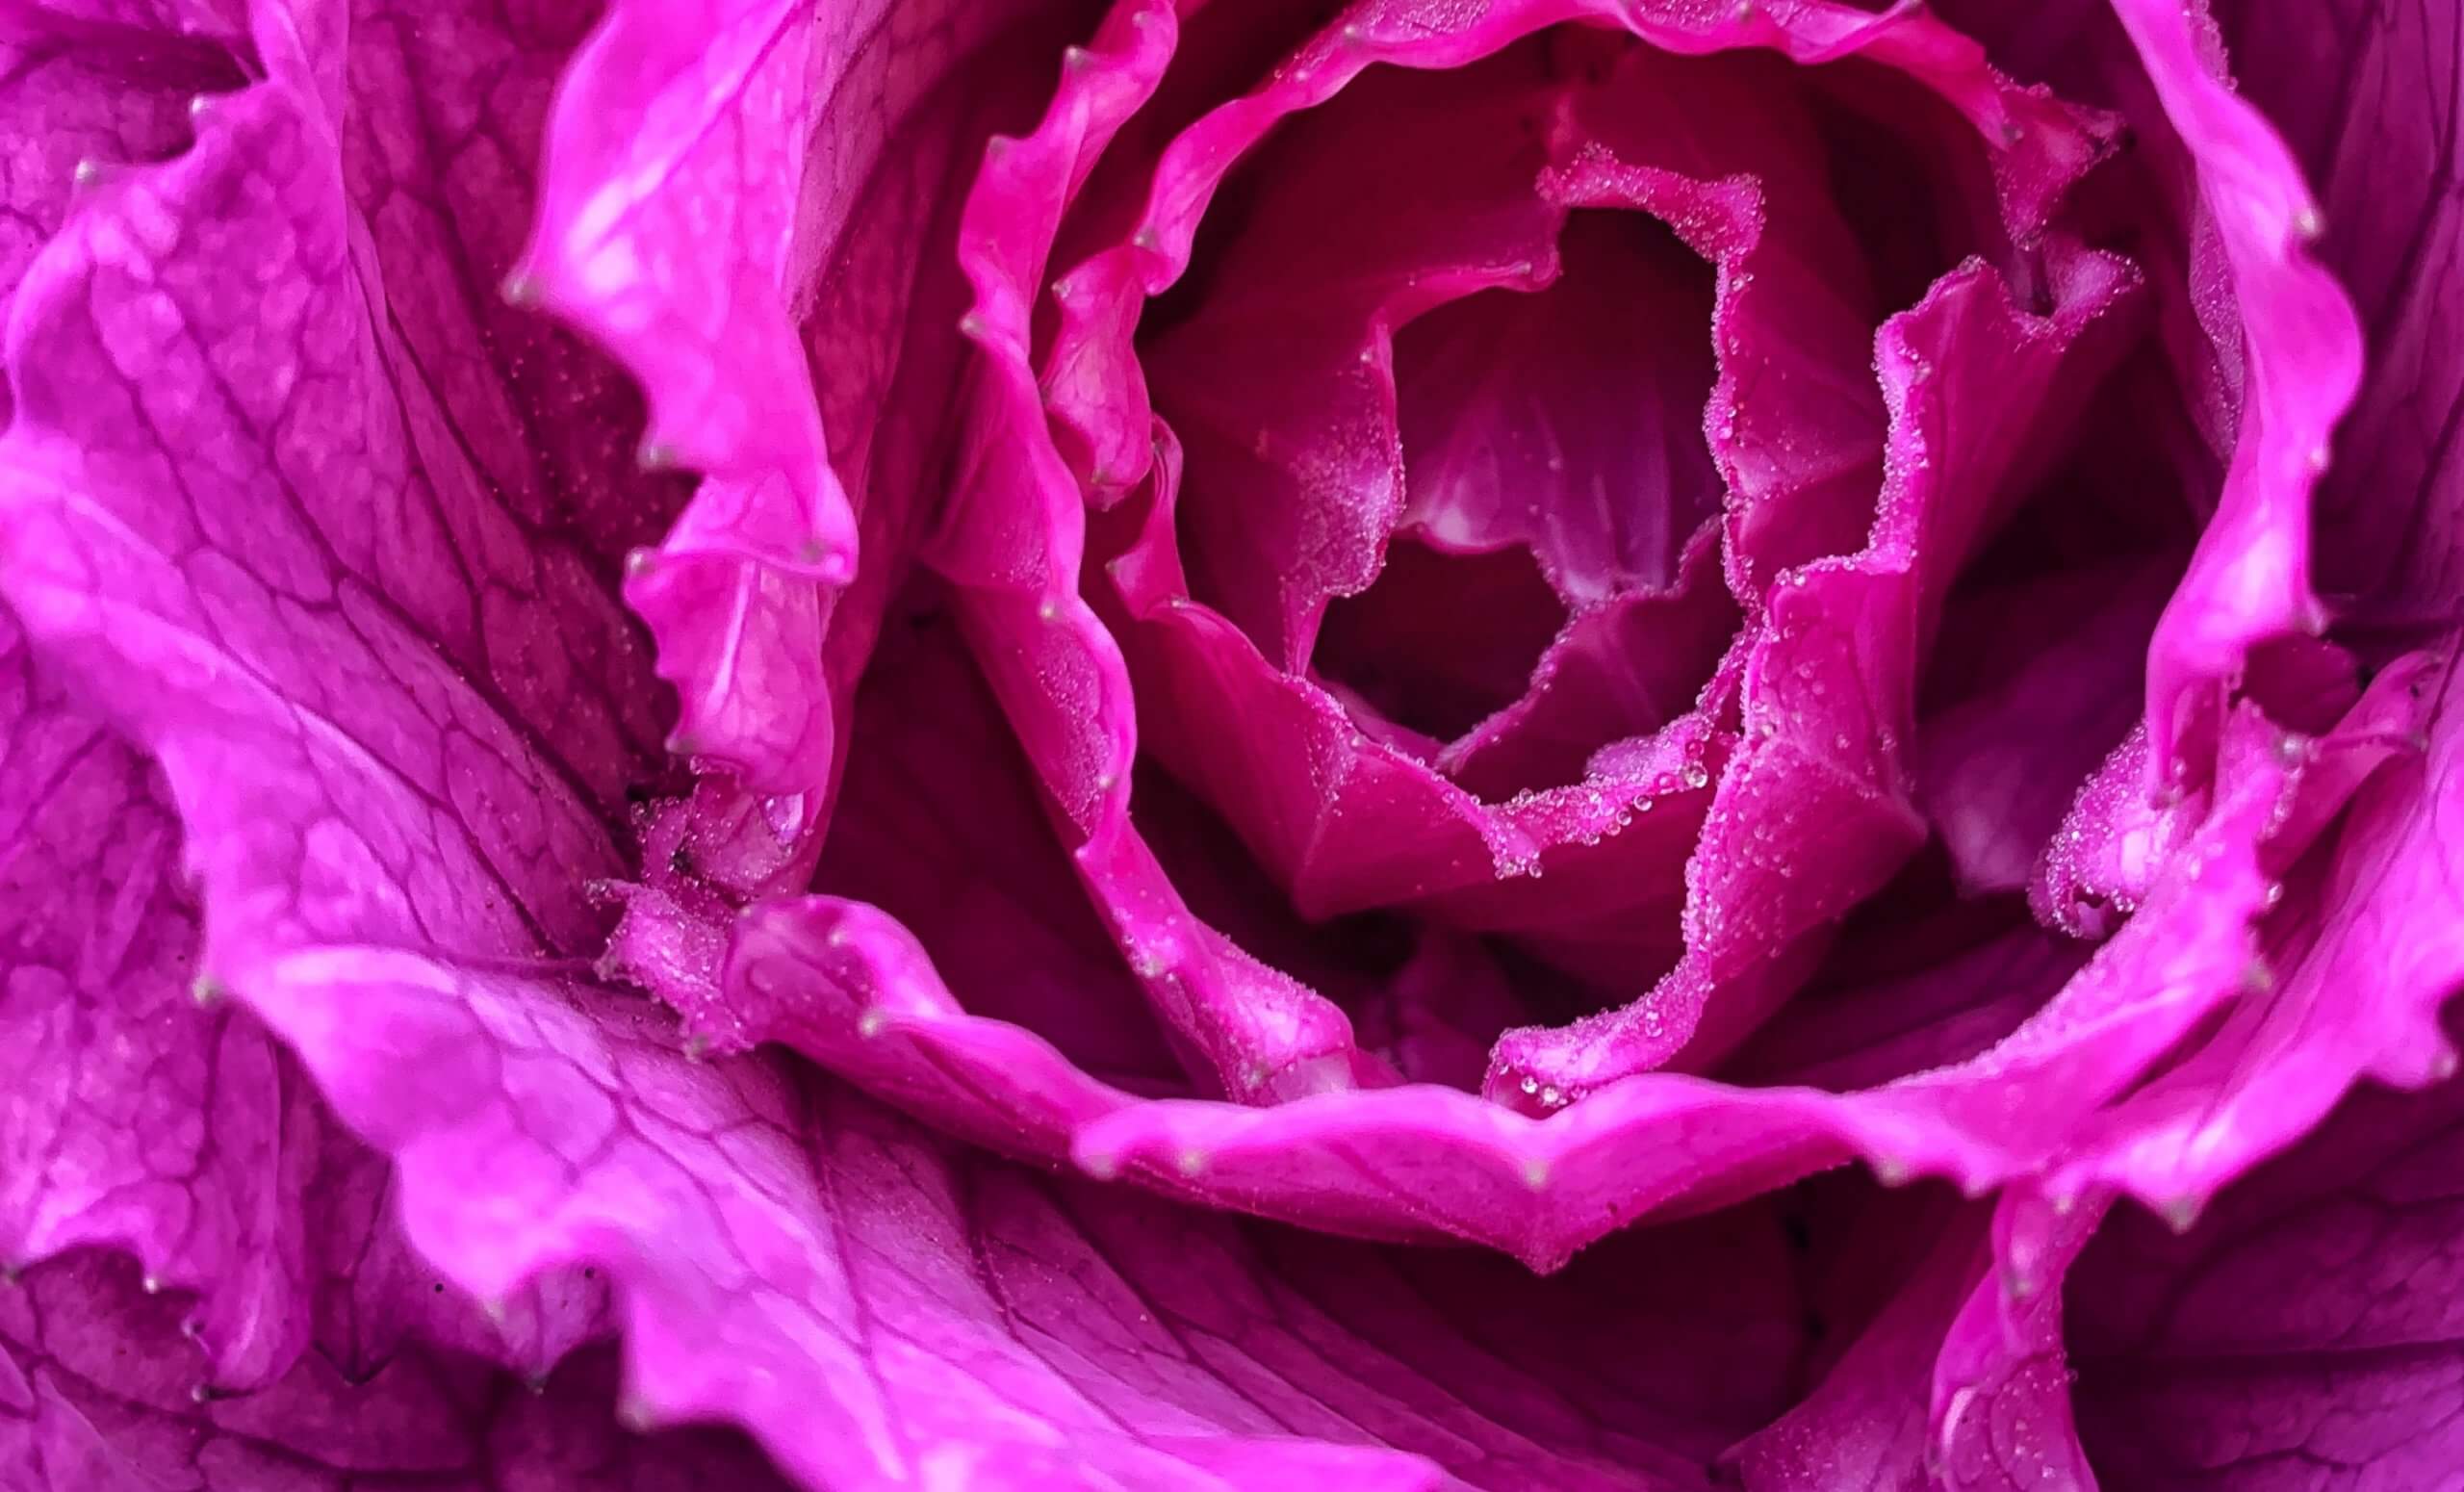 Closeup of purple cabbage